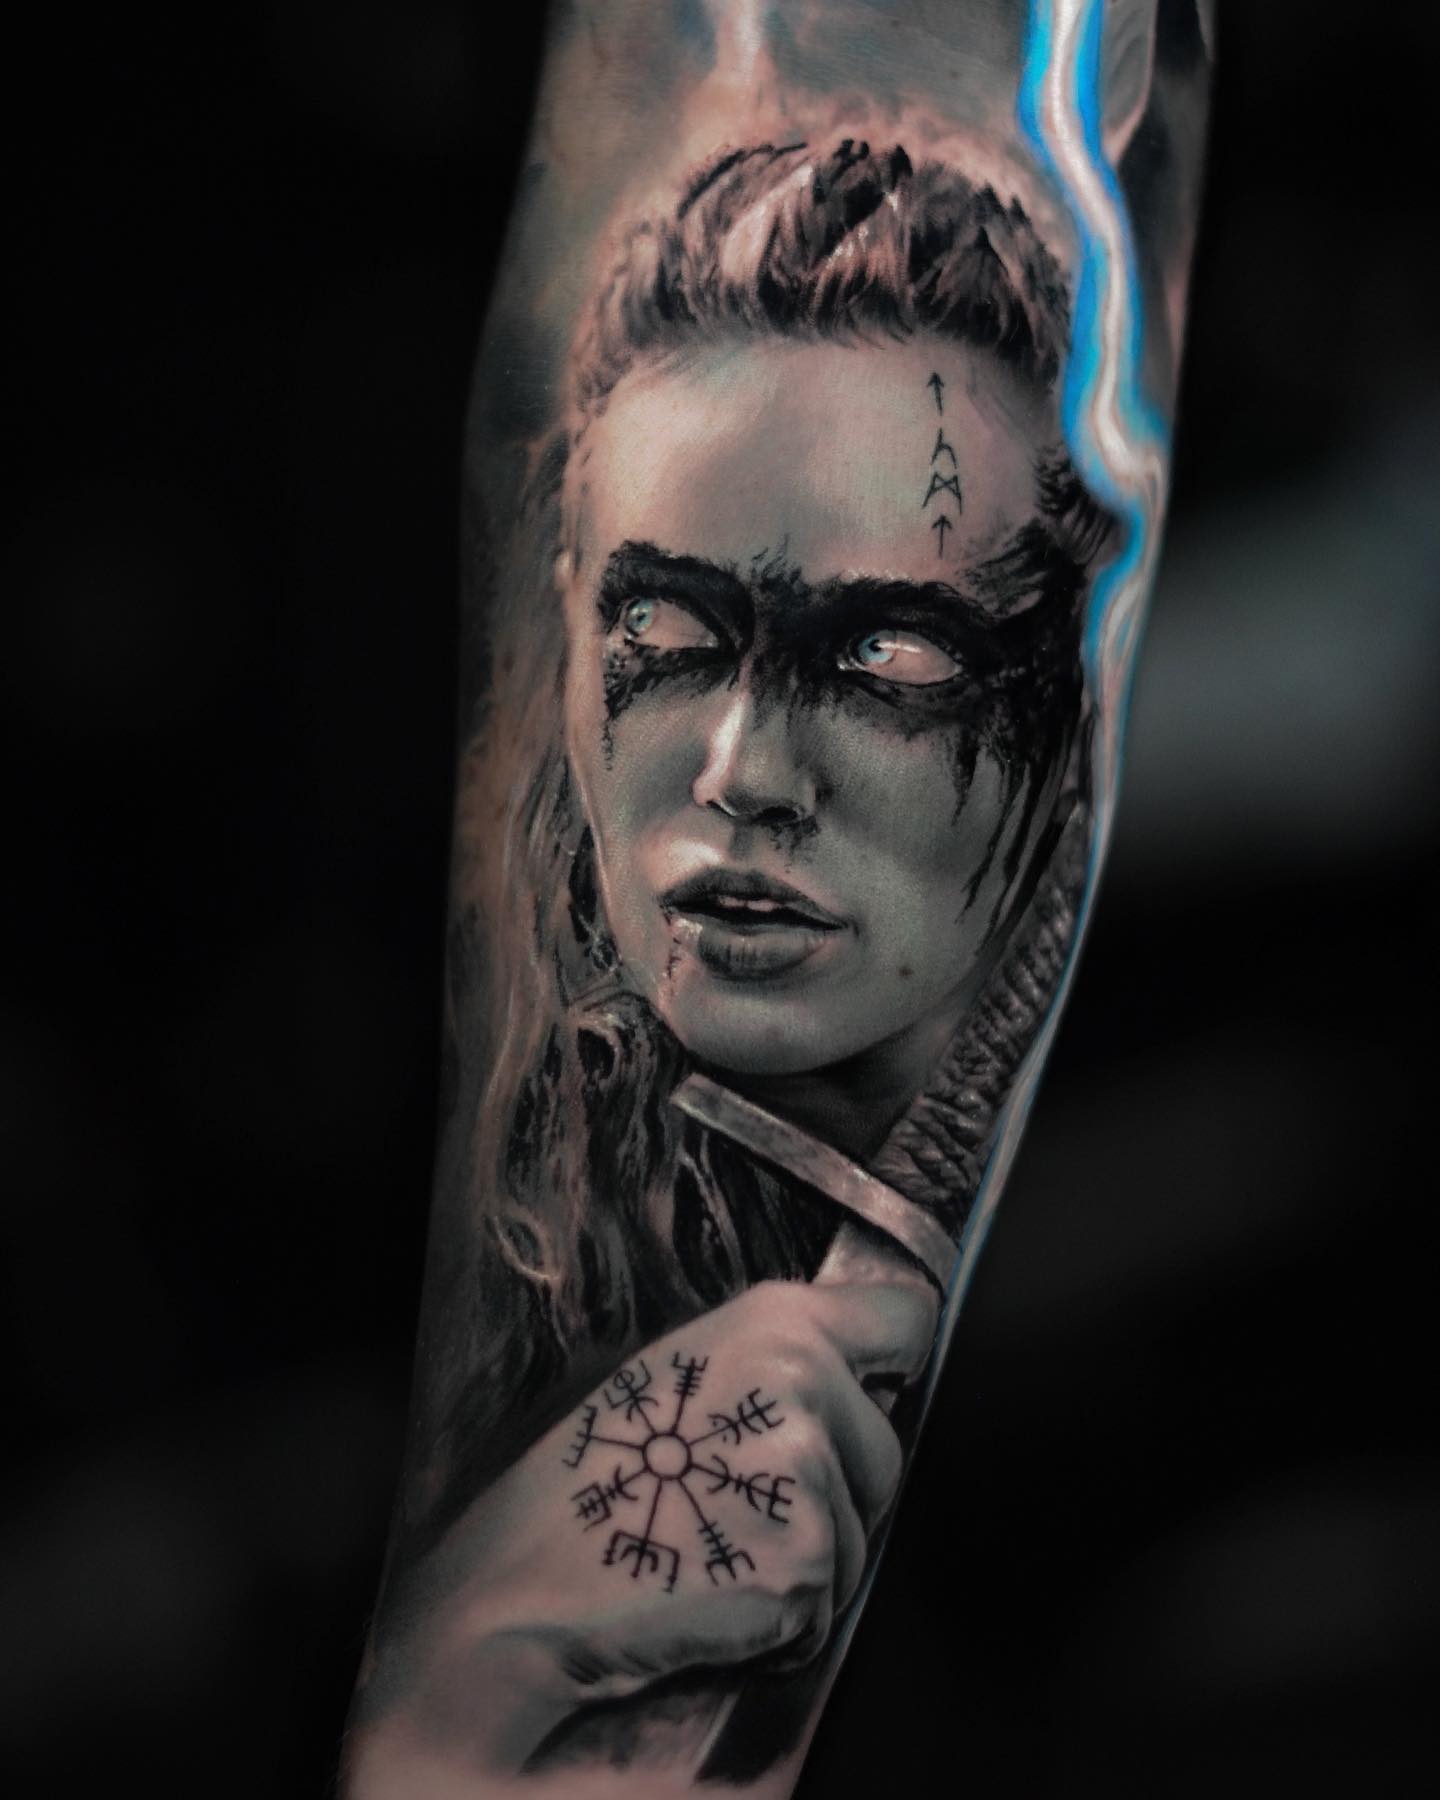 Tattoo Art Designs on X: Viking Women Warrior... ☆Tattoo Art By Tye  Tremblay ☆Location: Toronto,Canada ☆Instagram:@tyetremblay More Tattoo Art  On t.cowtOiAvW4b1 t.coOY4sPROg0T  X